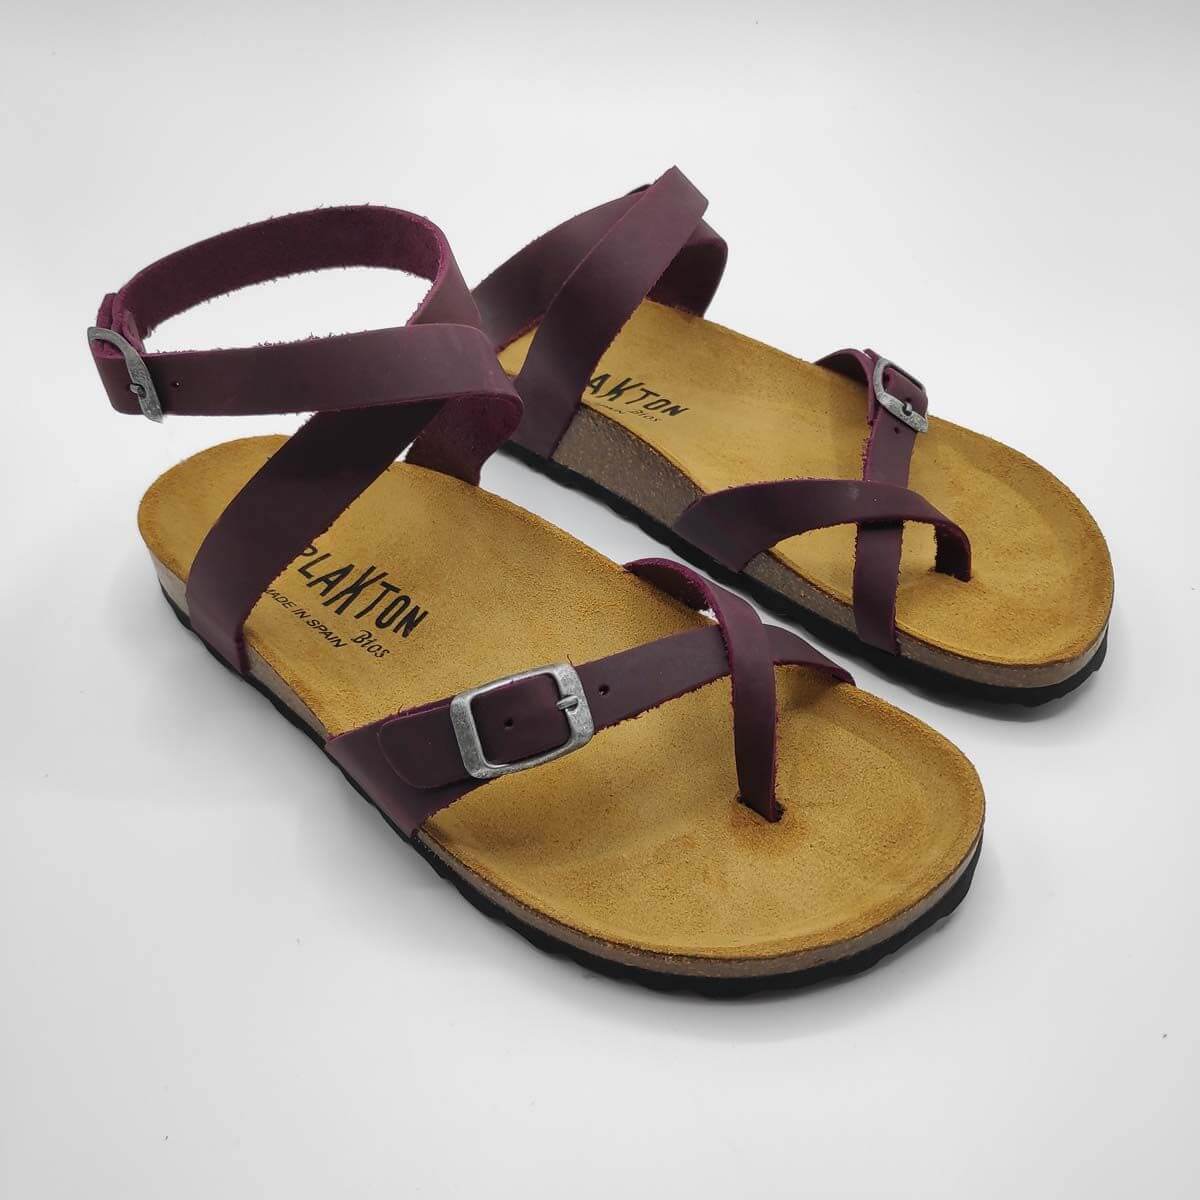 Plakton Sandals 101204 Ανατομικά - Δερμάτινα Σανδάλια Παγώνης | Χειροποίητα  Ελληνικά Σανδάλια | Νάξος